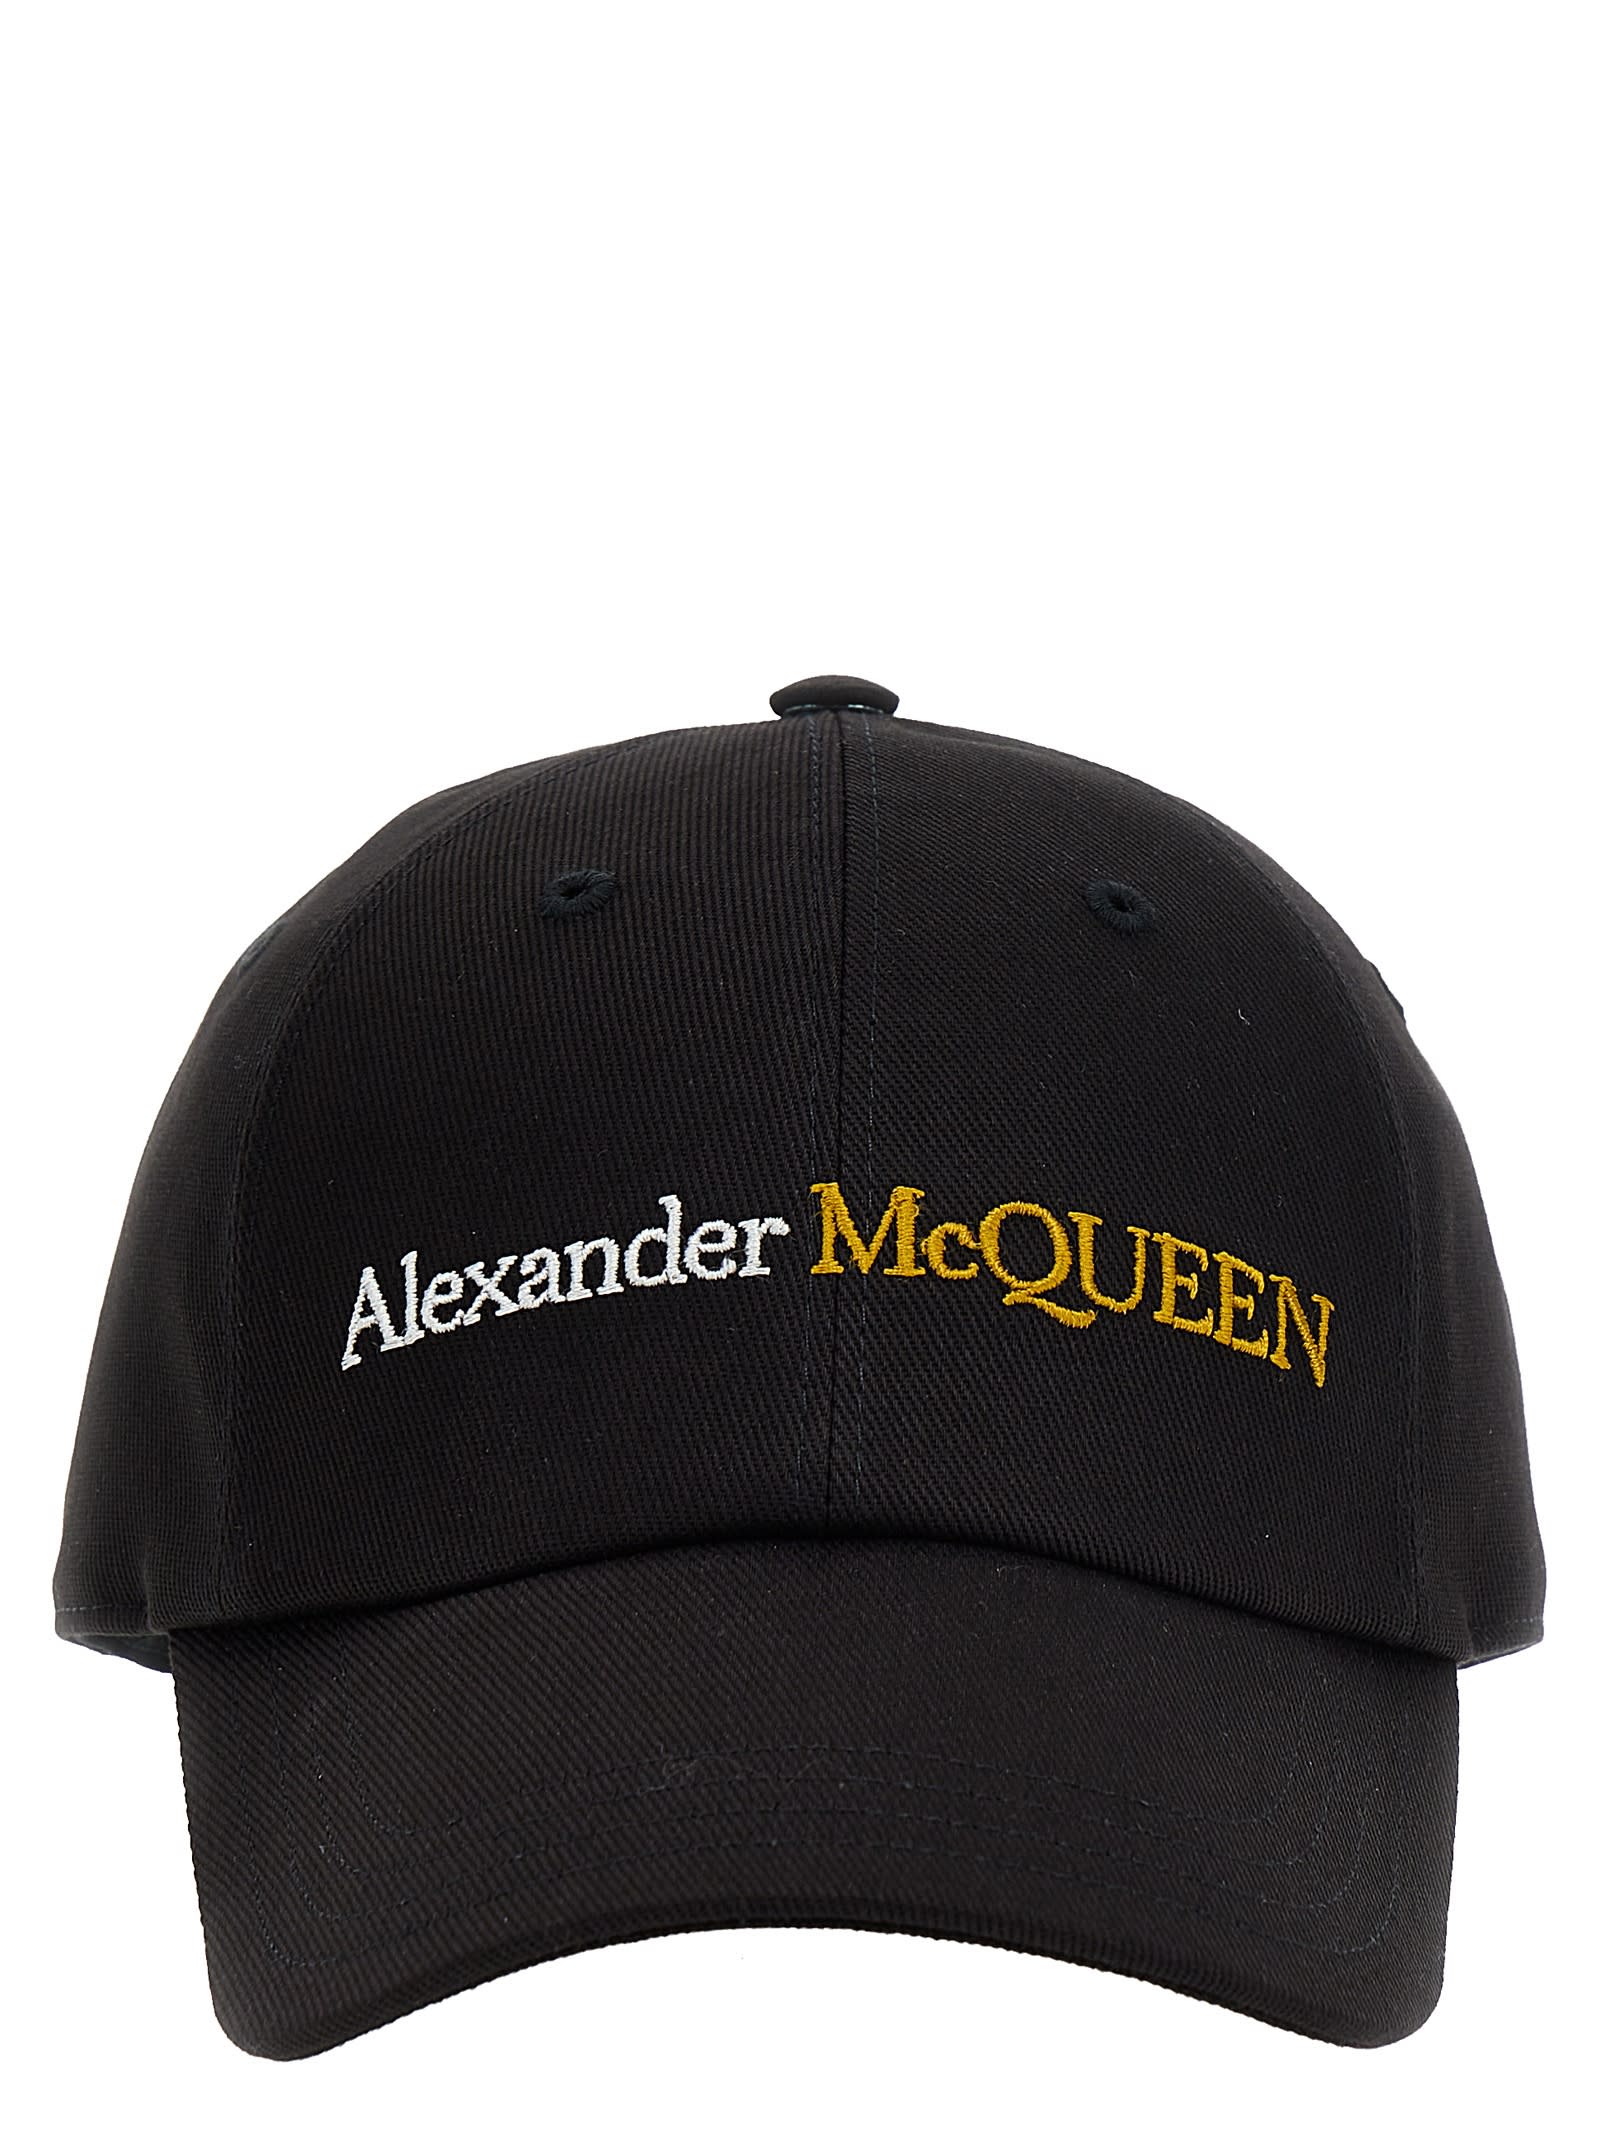 ALEXANDER MCQUEEN LOGO CAP